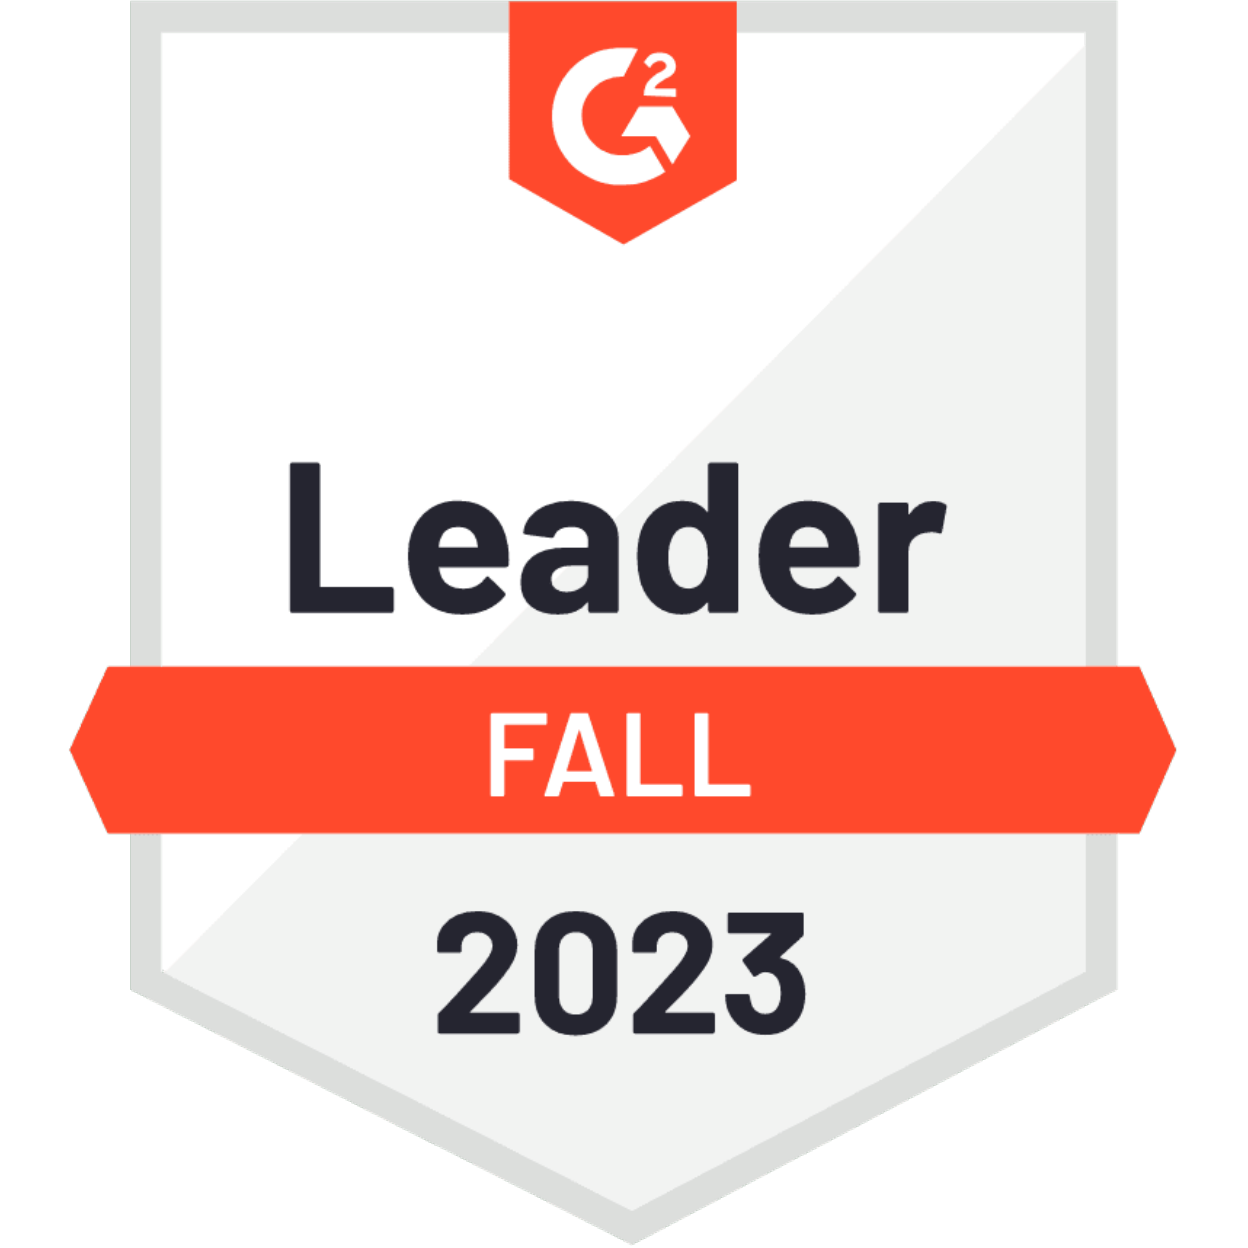 G2 Badge: Leader Fall 2023